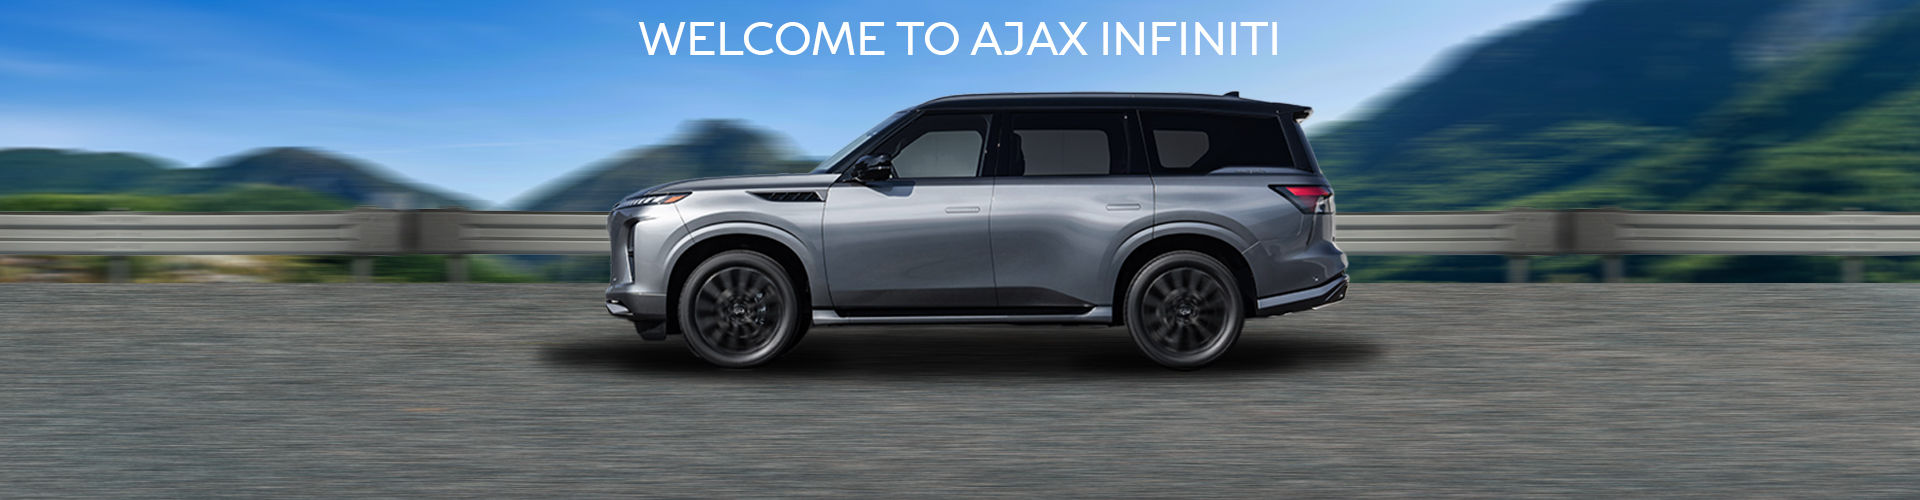 Welcome To Ajax Infiniti